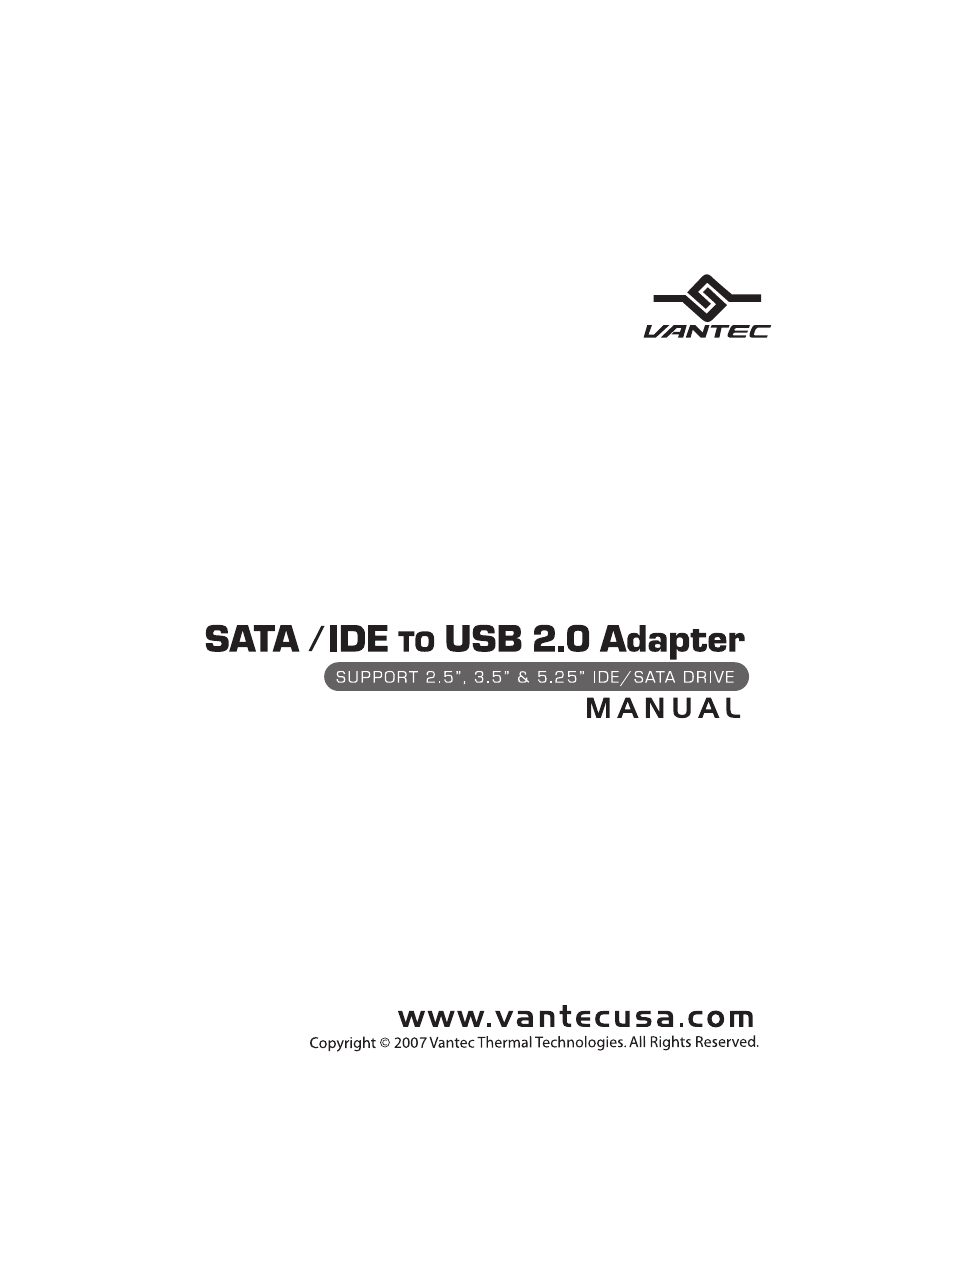 SATA/IDE to USB 2.0 Adapter None